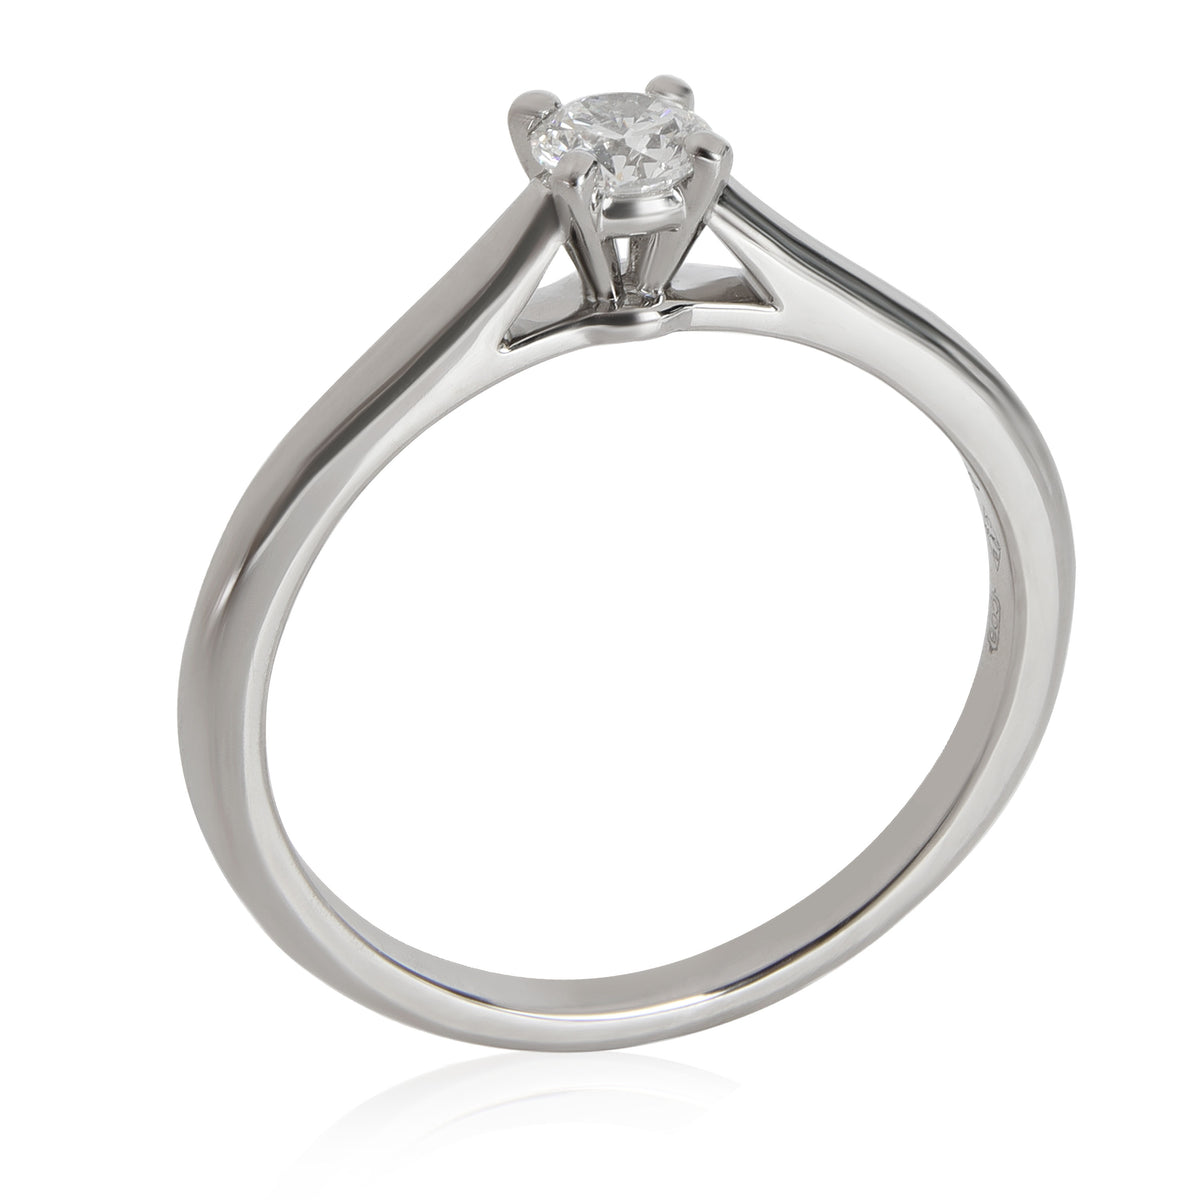 Cartier 1895 Solitaire Diamond Engagement Ring in  Platinum E IF 0.23 CTW